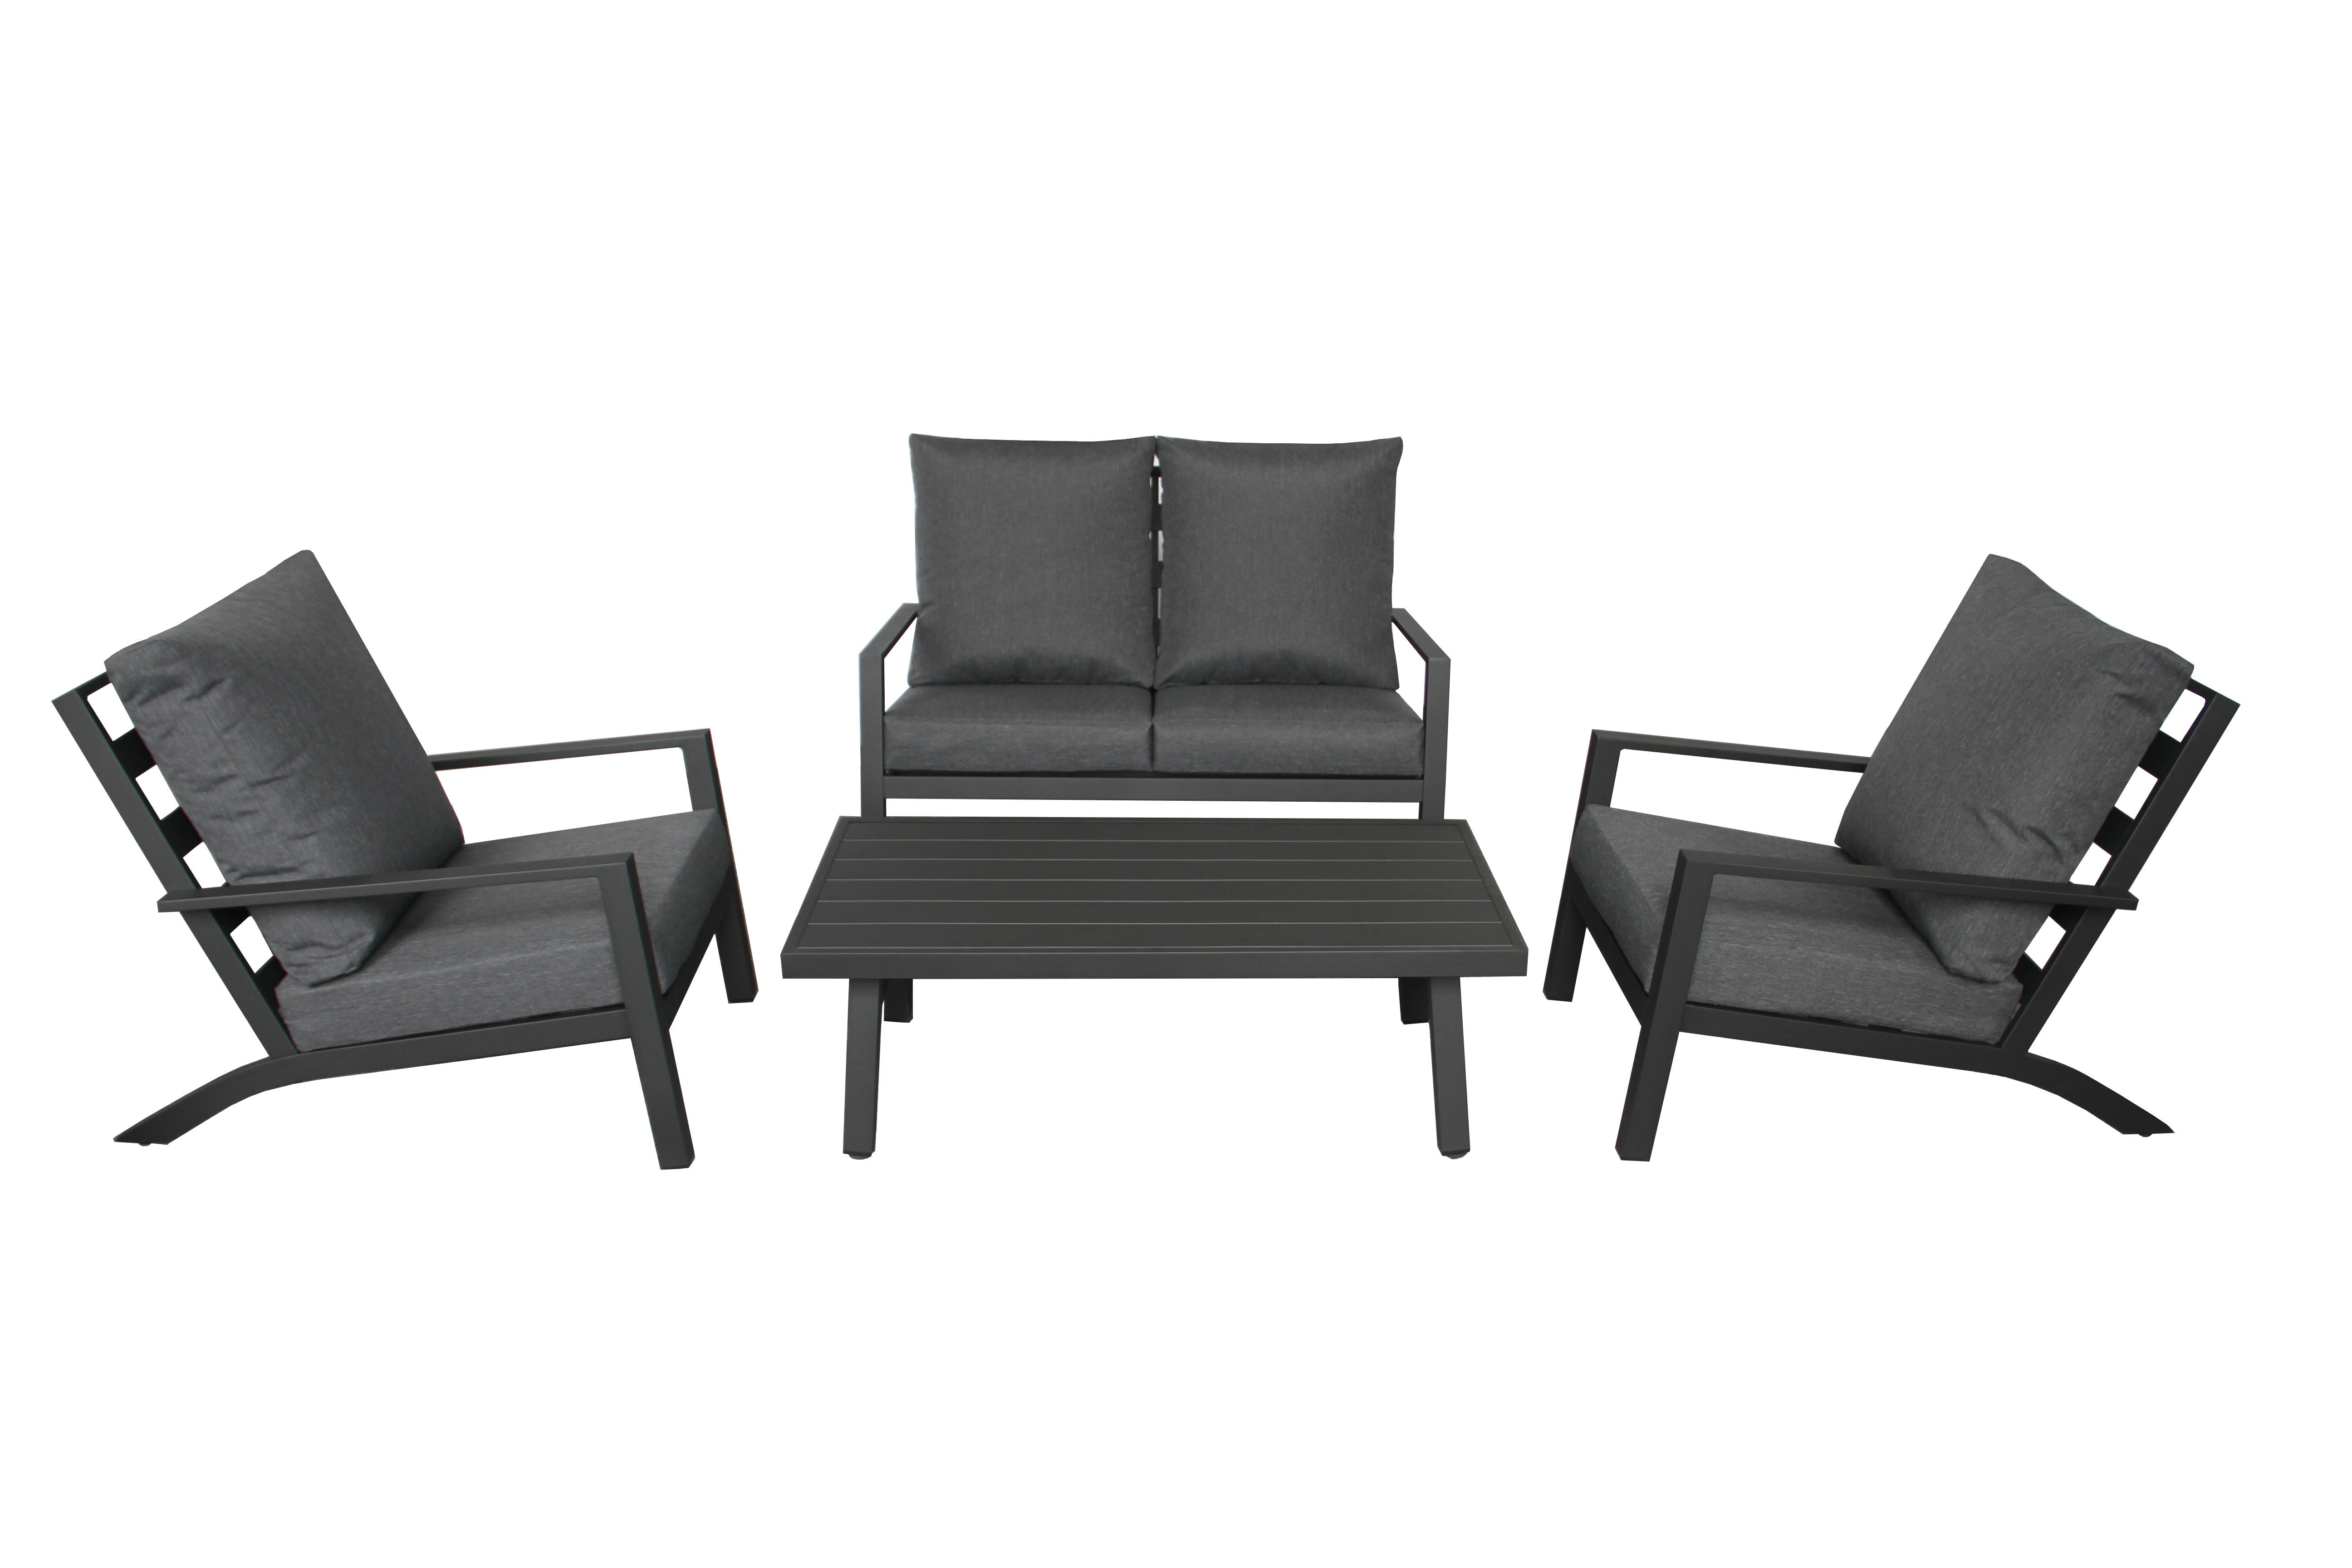 PatioZone 4Pcs Deep Seating Set with 5" Spun Polyester Cushions and Aluminum Frame (PZ-SN23-010) - Black / Grey